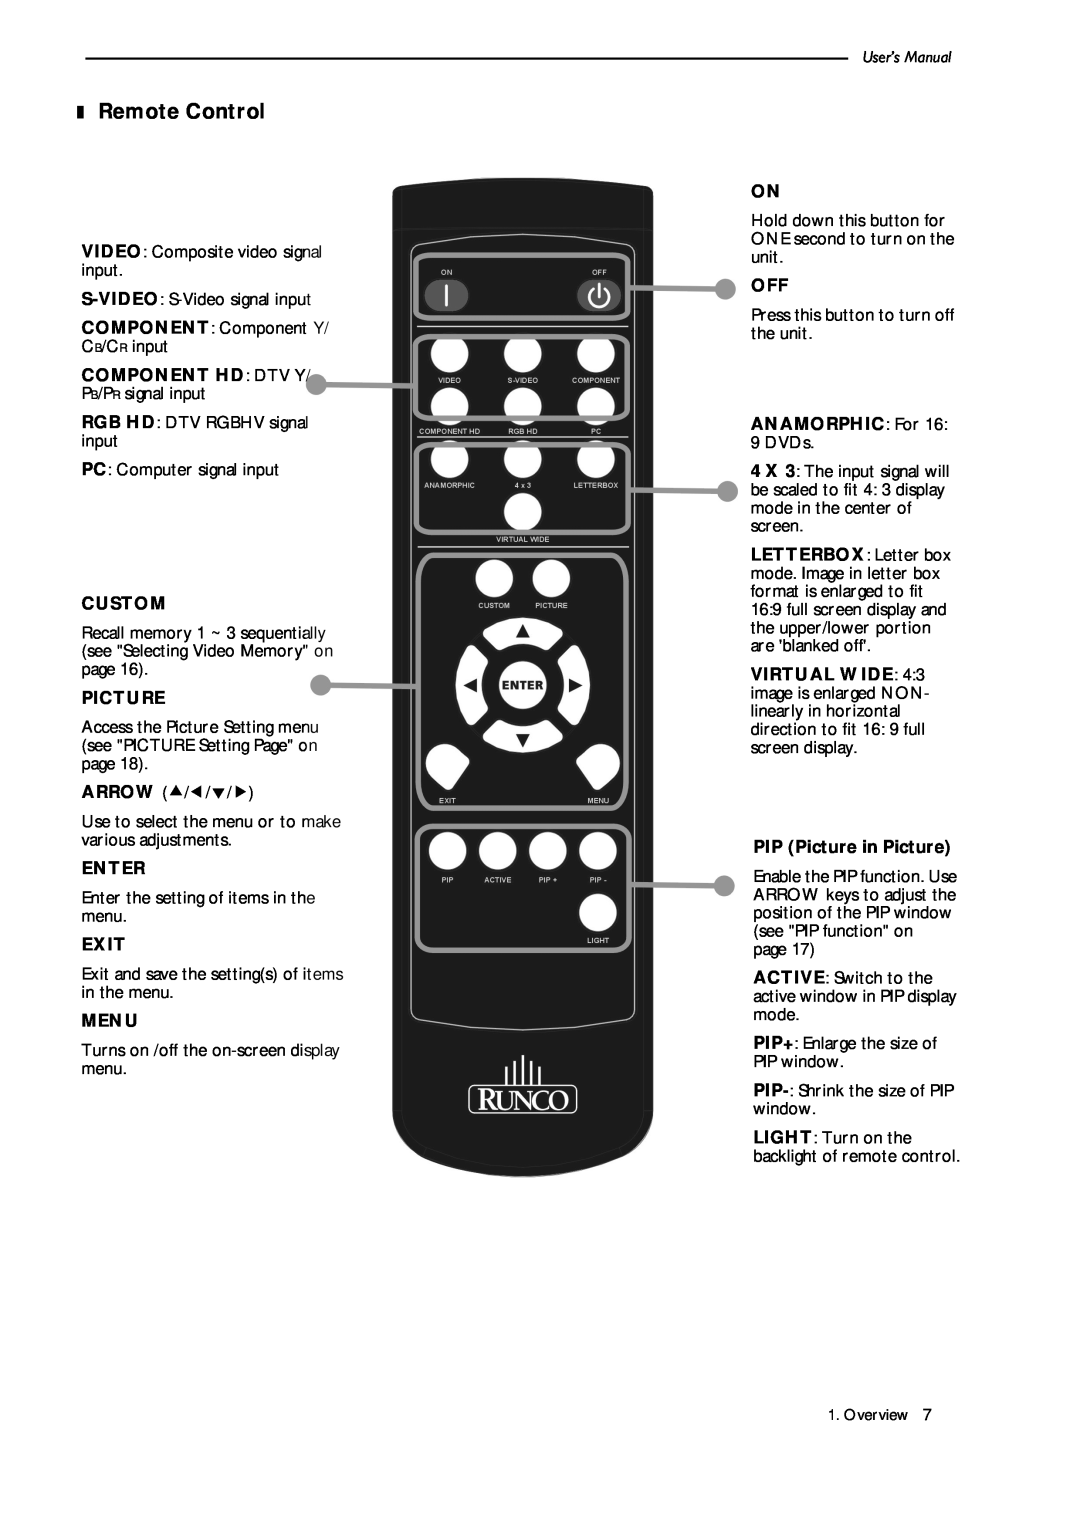 Runco CL-500 Remote Control, COMPONENT HD DTV Y/ PB/PR signal input, Custom, Picture, Enter, Exit, Menu, ANAMORPHIC For 